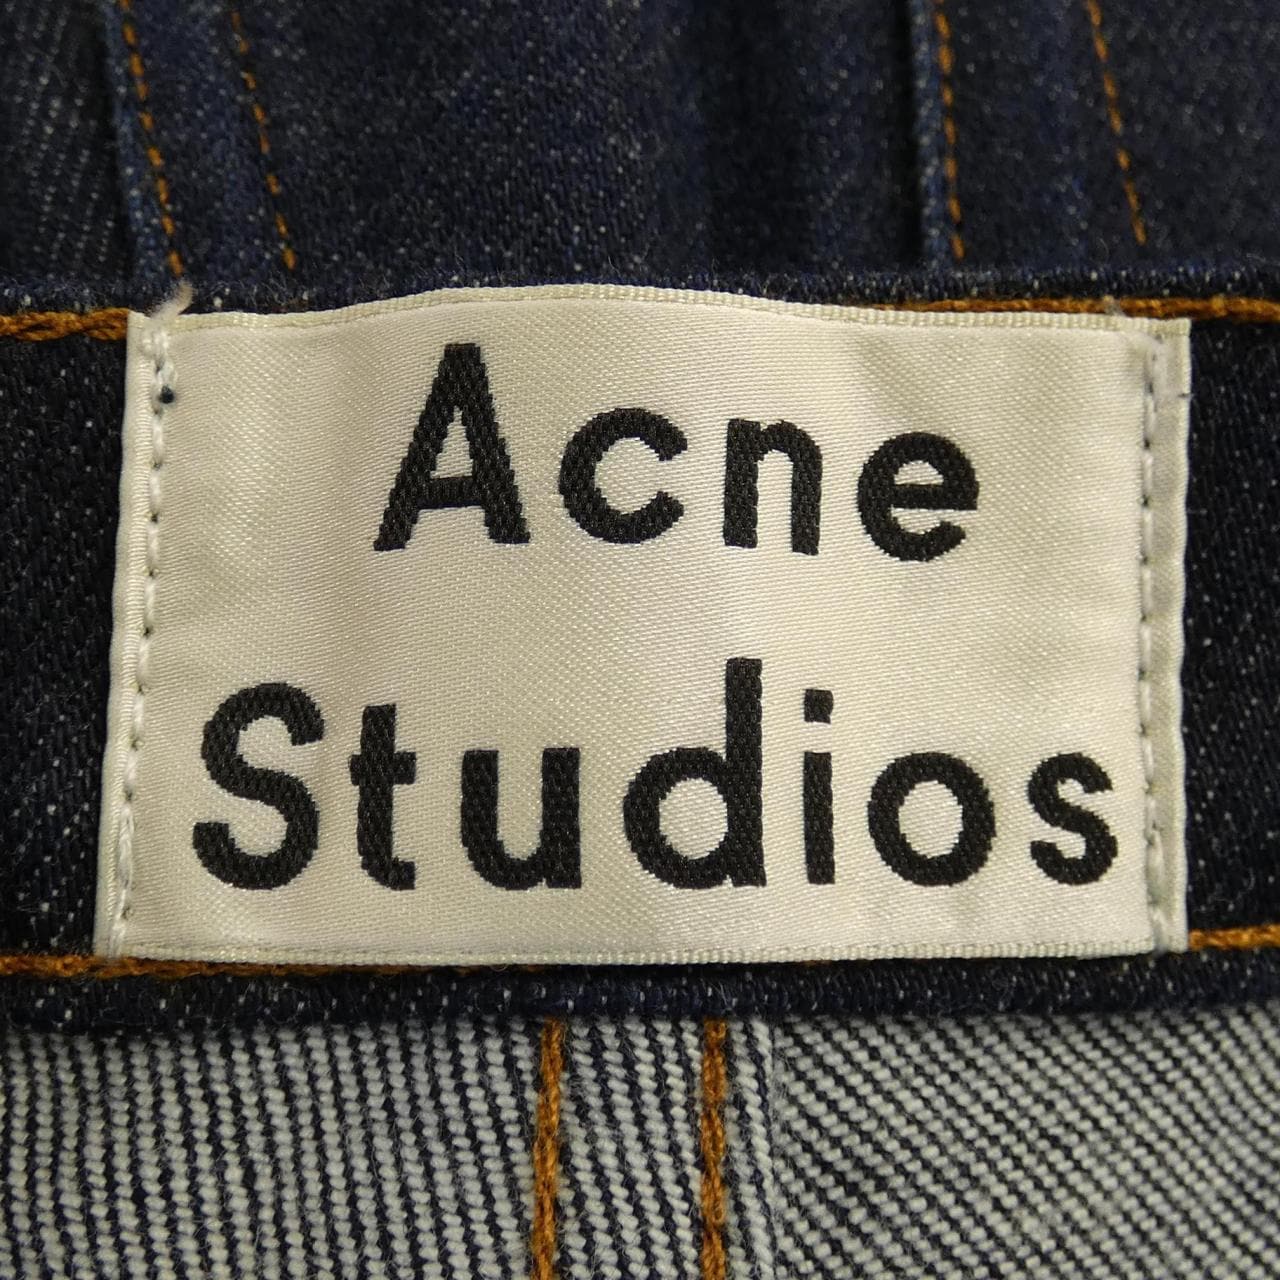 ACNE STUDIOS jeans